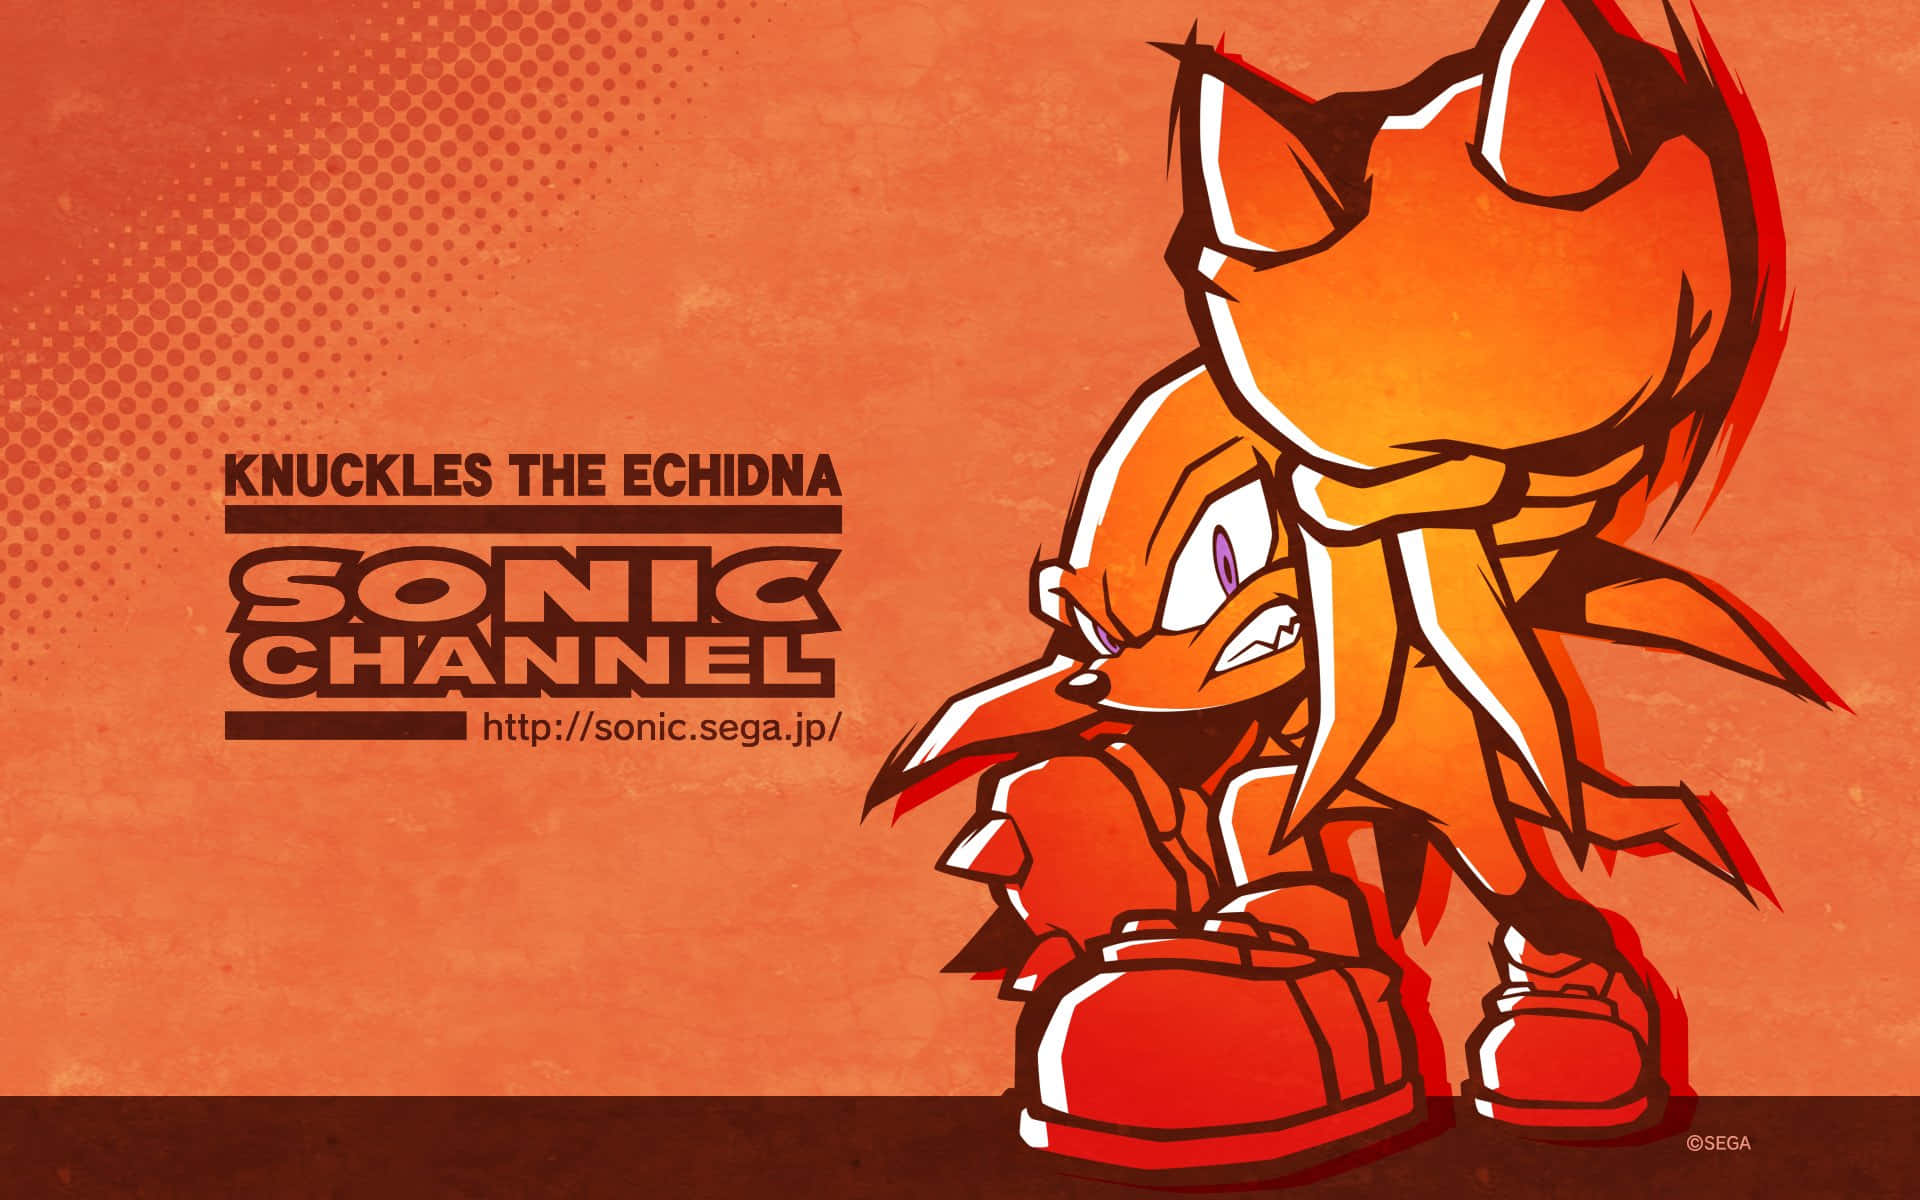 Knucklesthe Echidna Från Sonic The Hedgehog Wallpaper